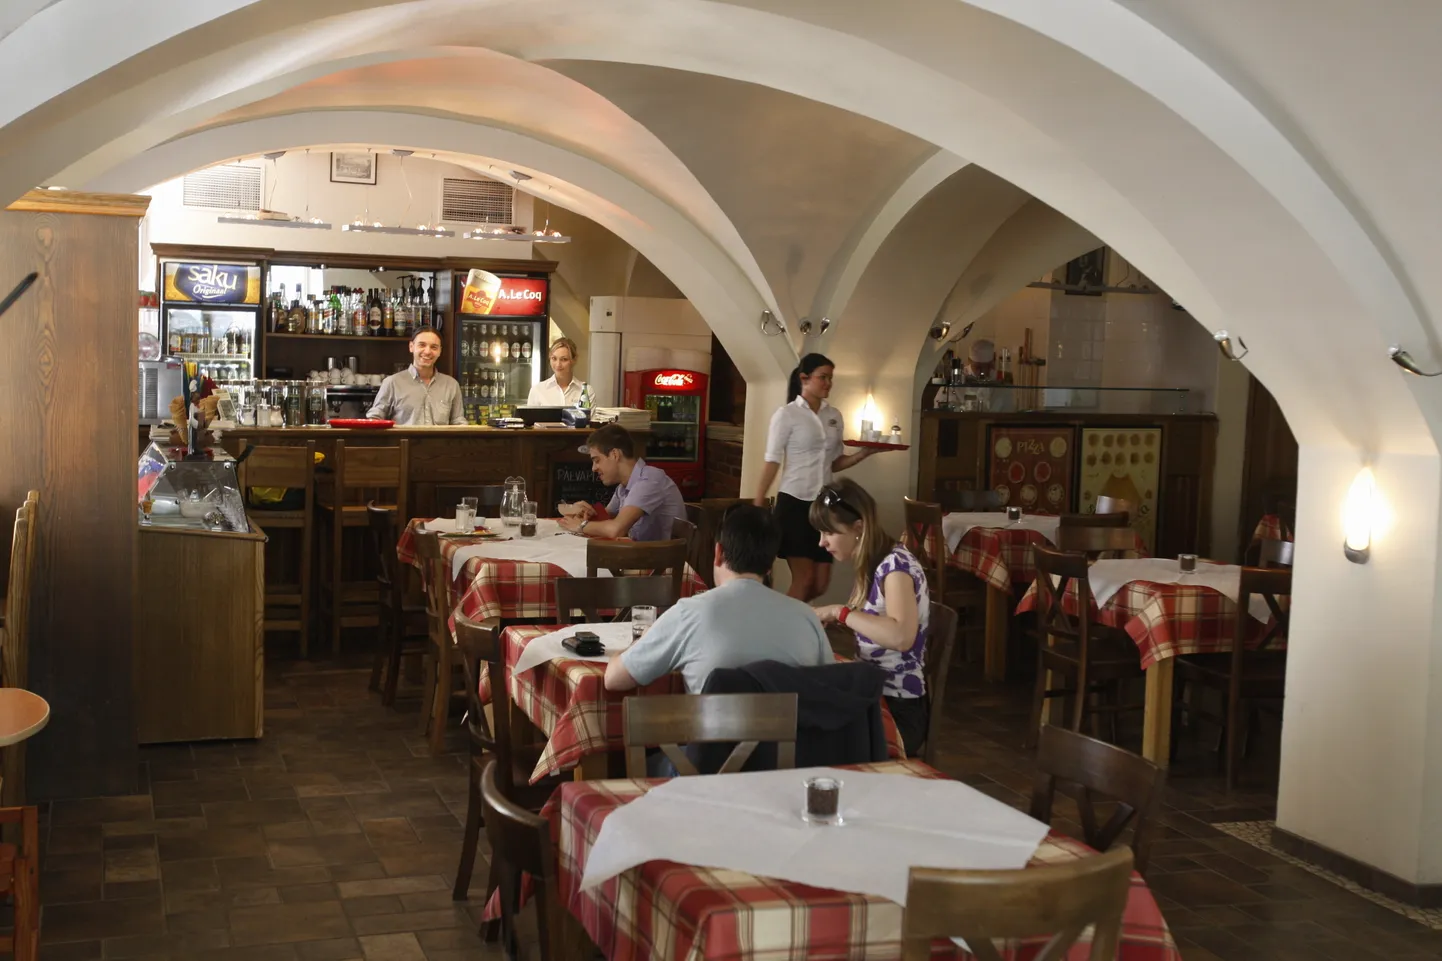 На ресторан La Dolce Vita тоже поступила жалоба, хотя сейчас там работают одни эстонцы.